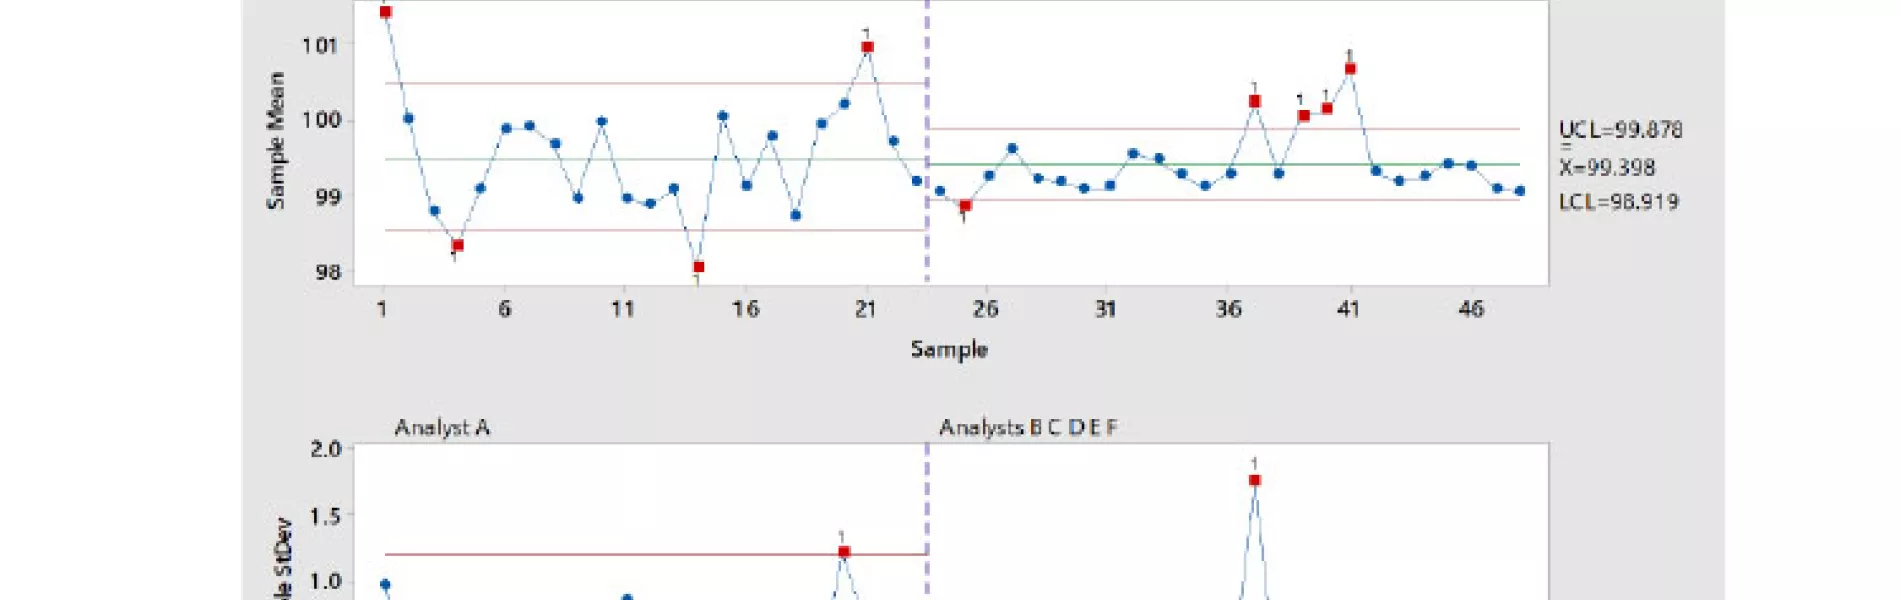 Figure 1: Potency assay blind control Xbar-S chart.